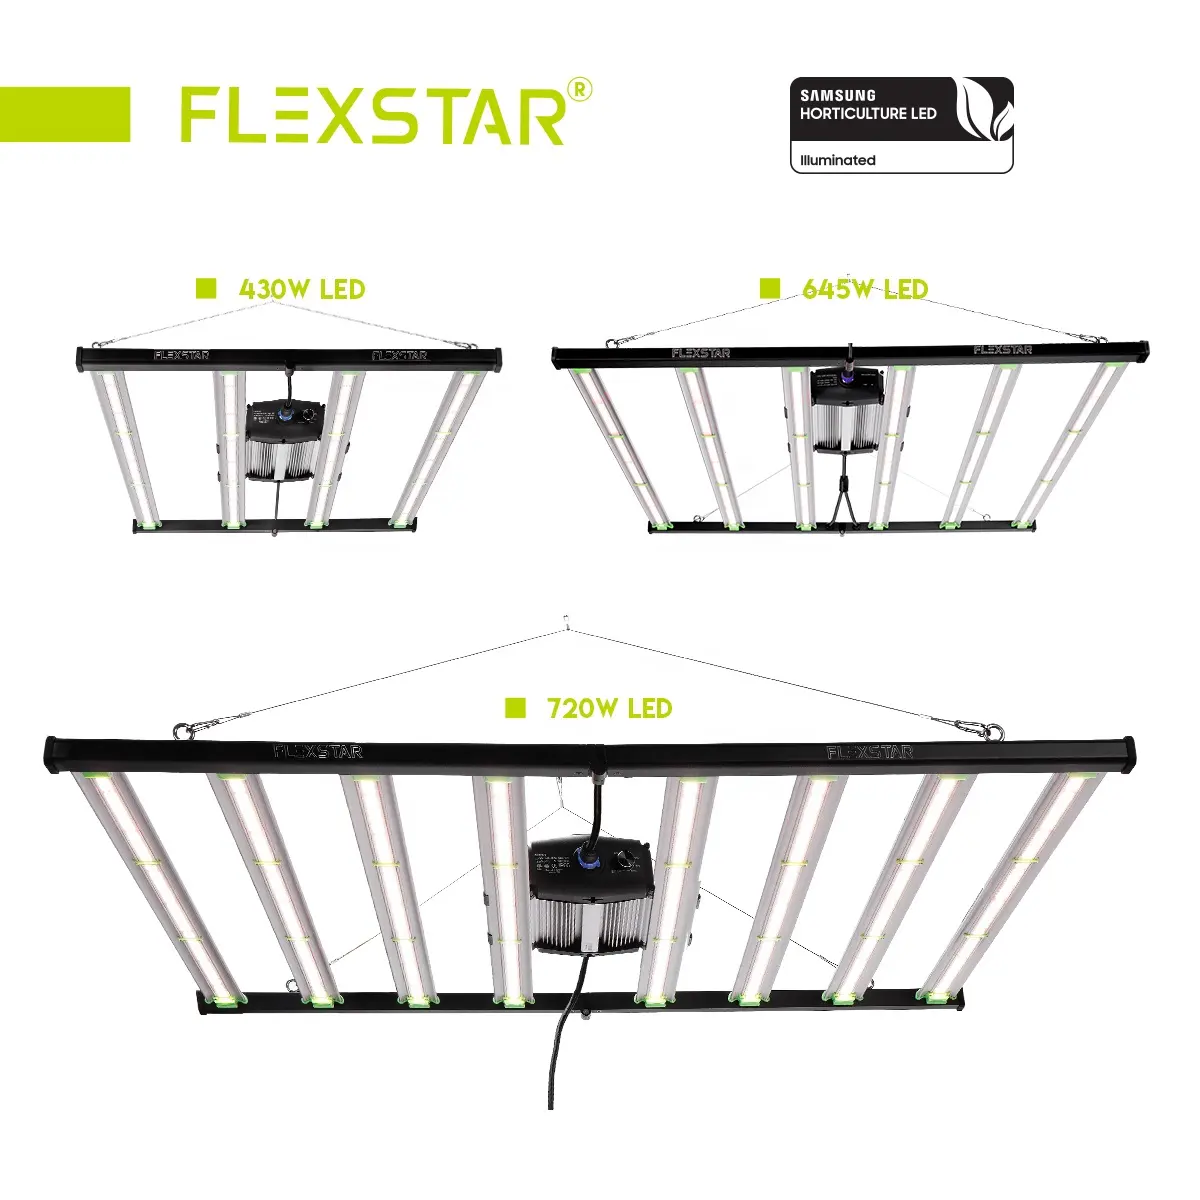 One Day Shipping Flexstar Pro Yields bis zu 4lbs 301h 301b 2.8 umol/J Efficacy höher als 1700e LED Grow Light